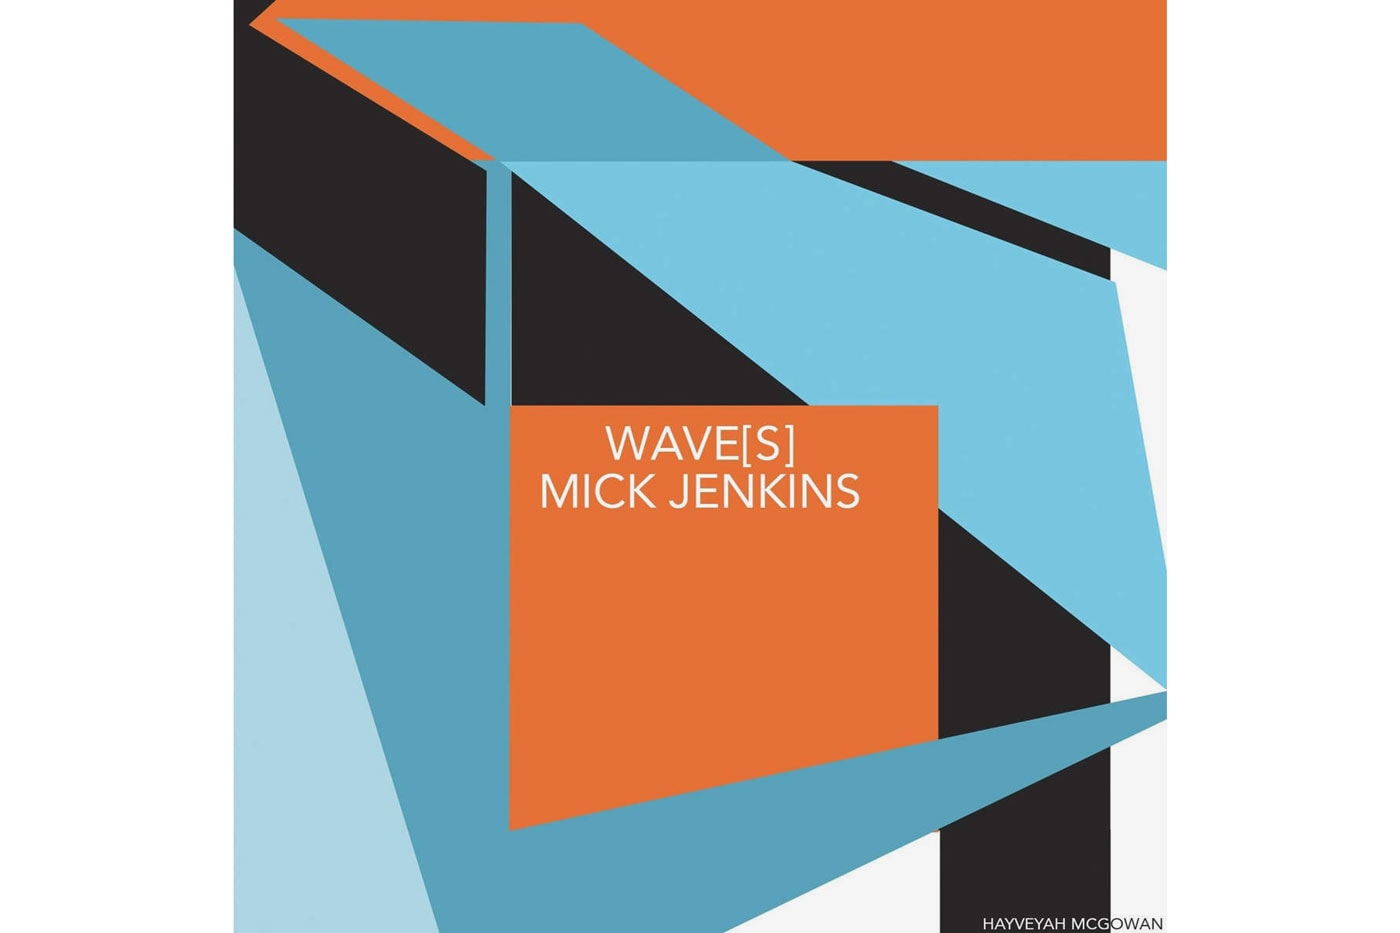 Mick Jenkins - Wave[s] (Mixtape Stream)